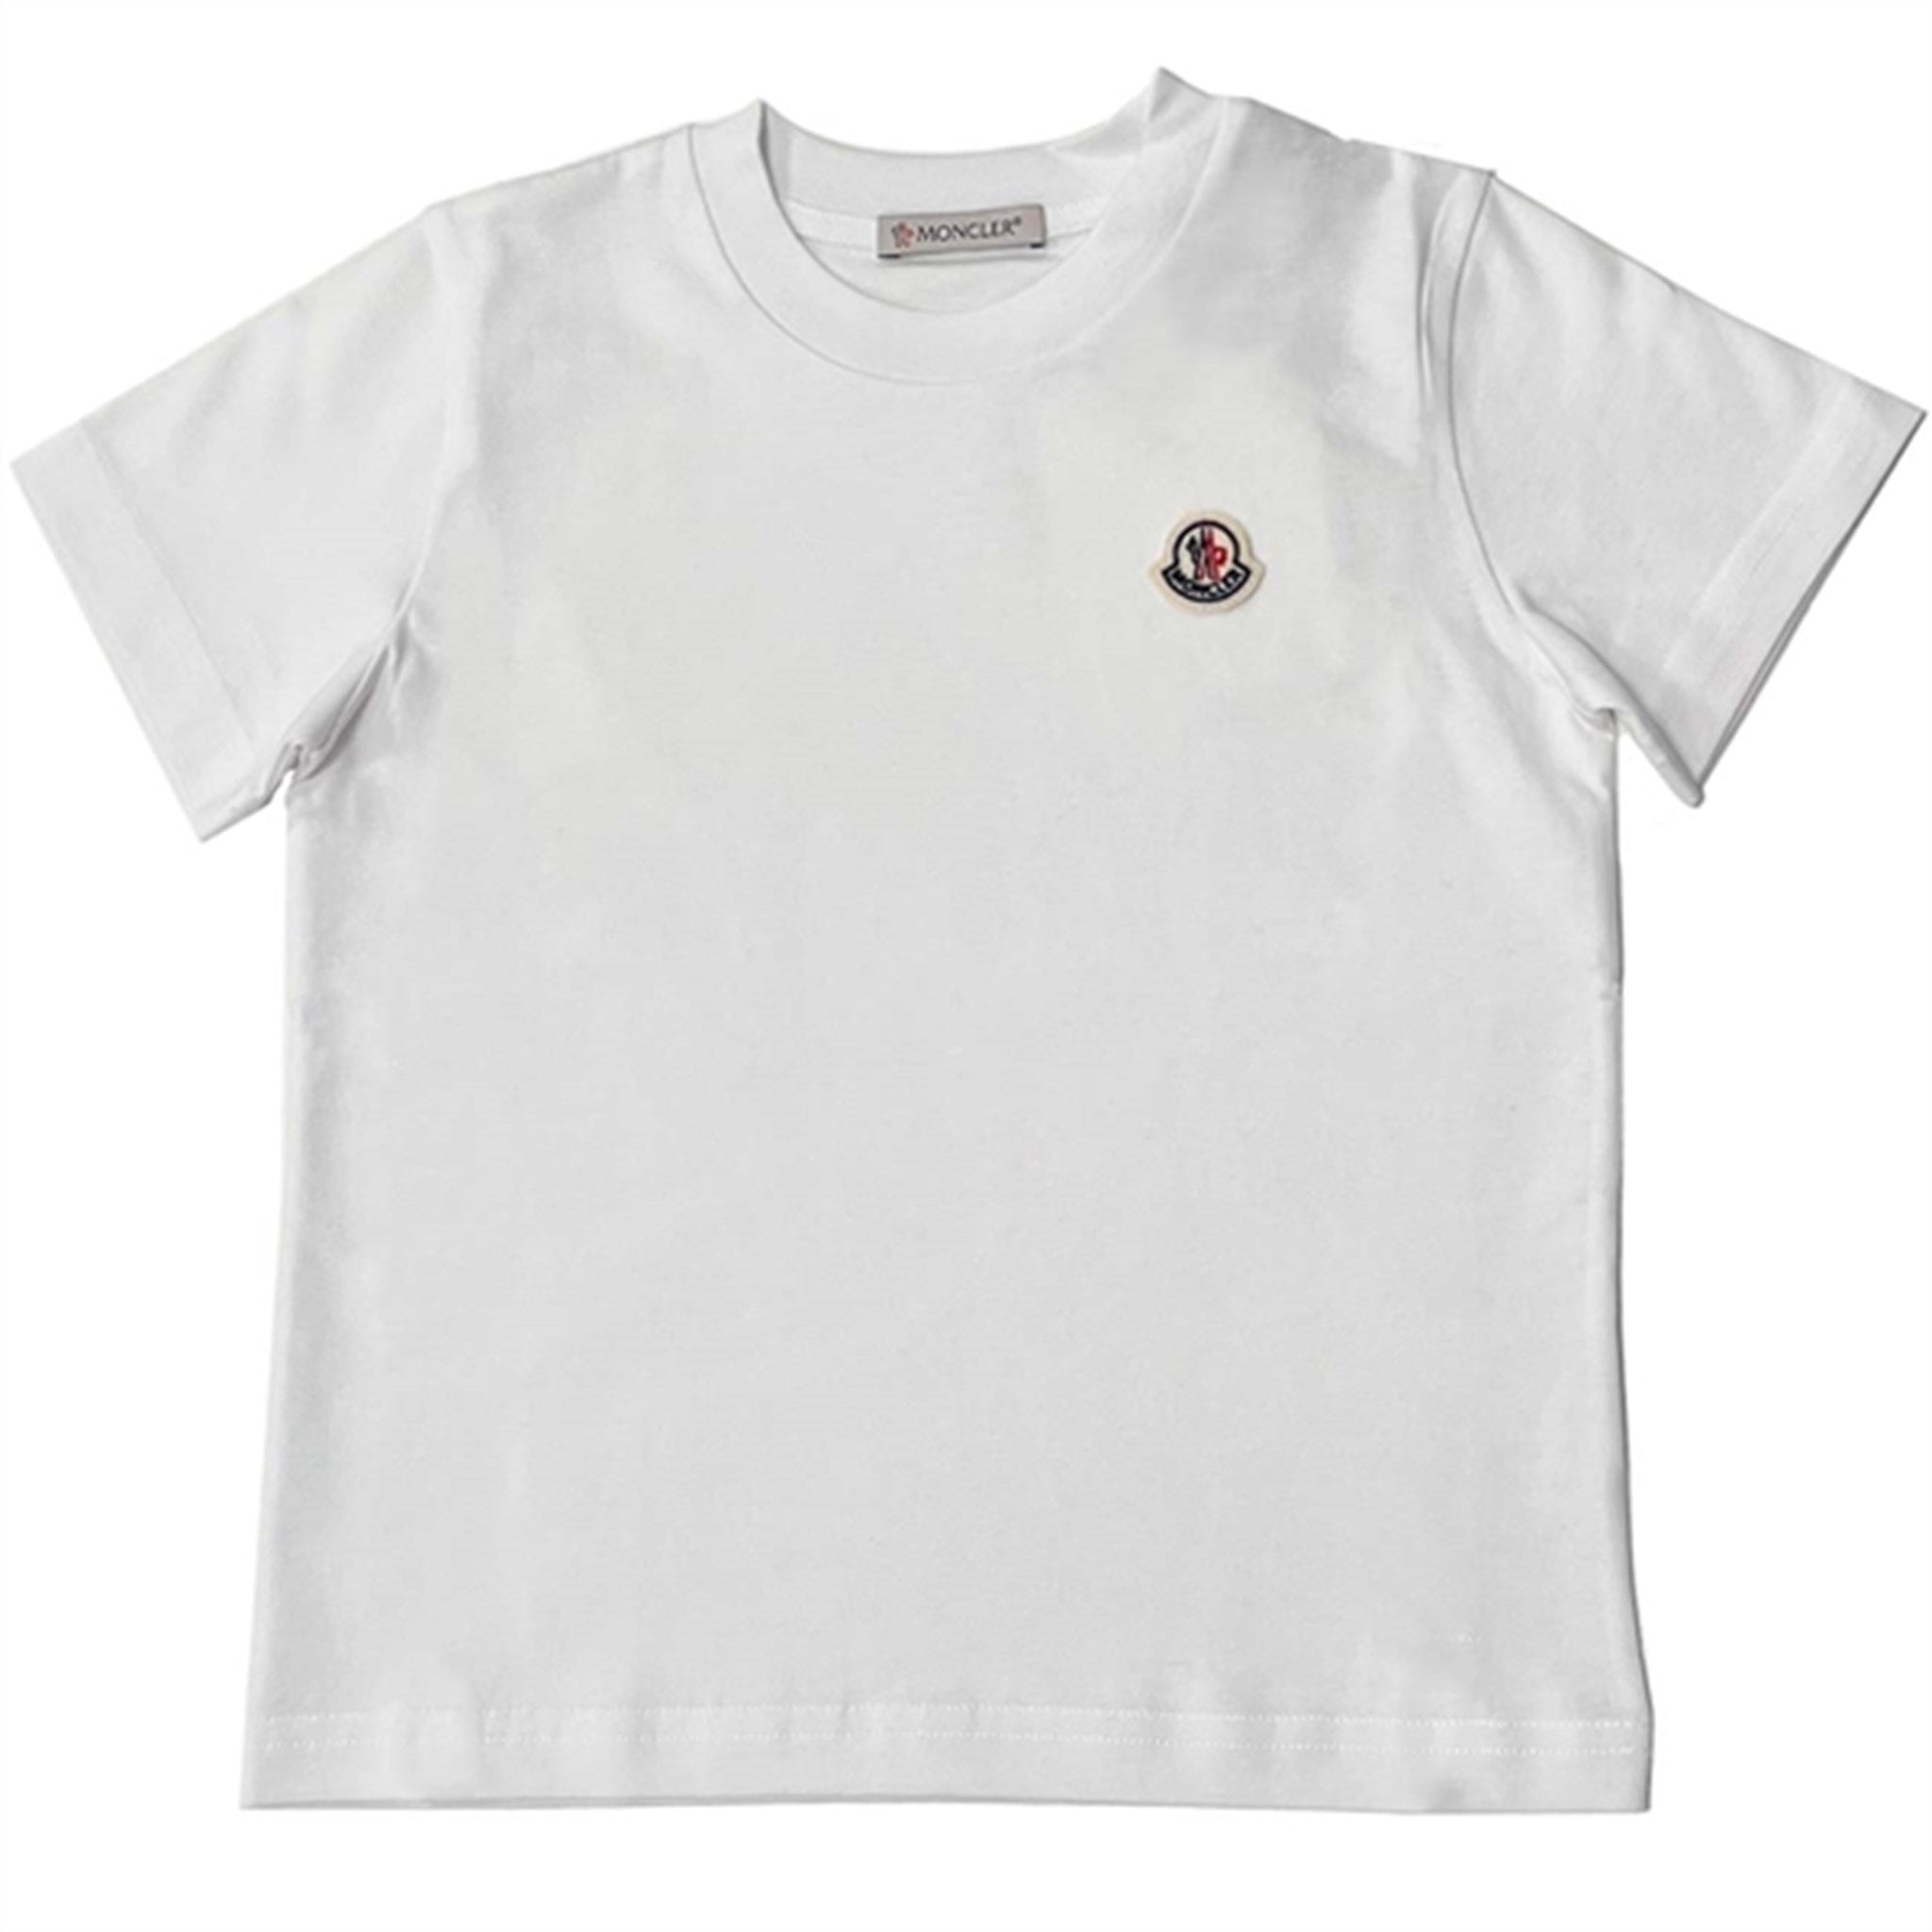 Moncler T-shirt White